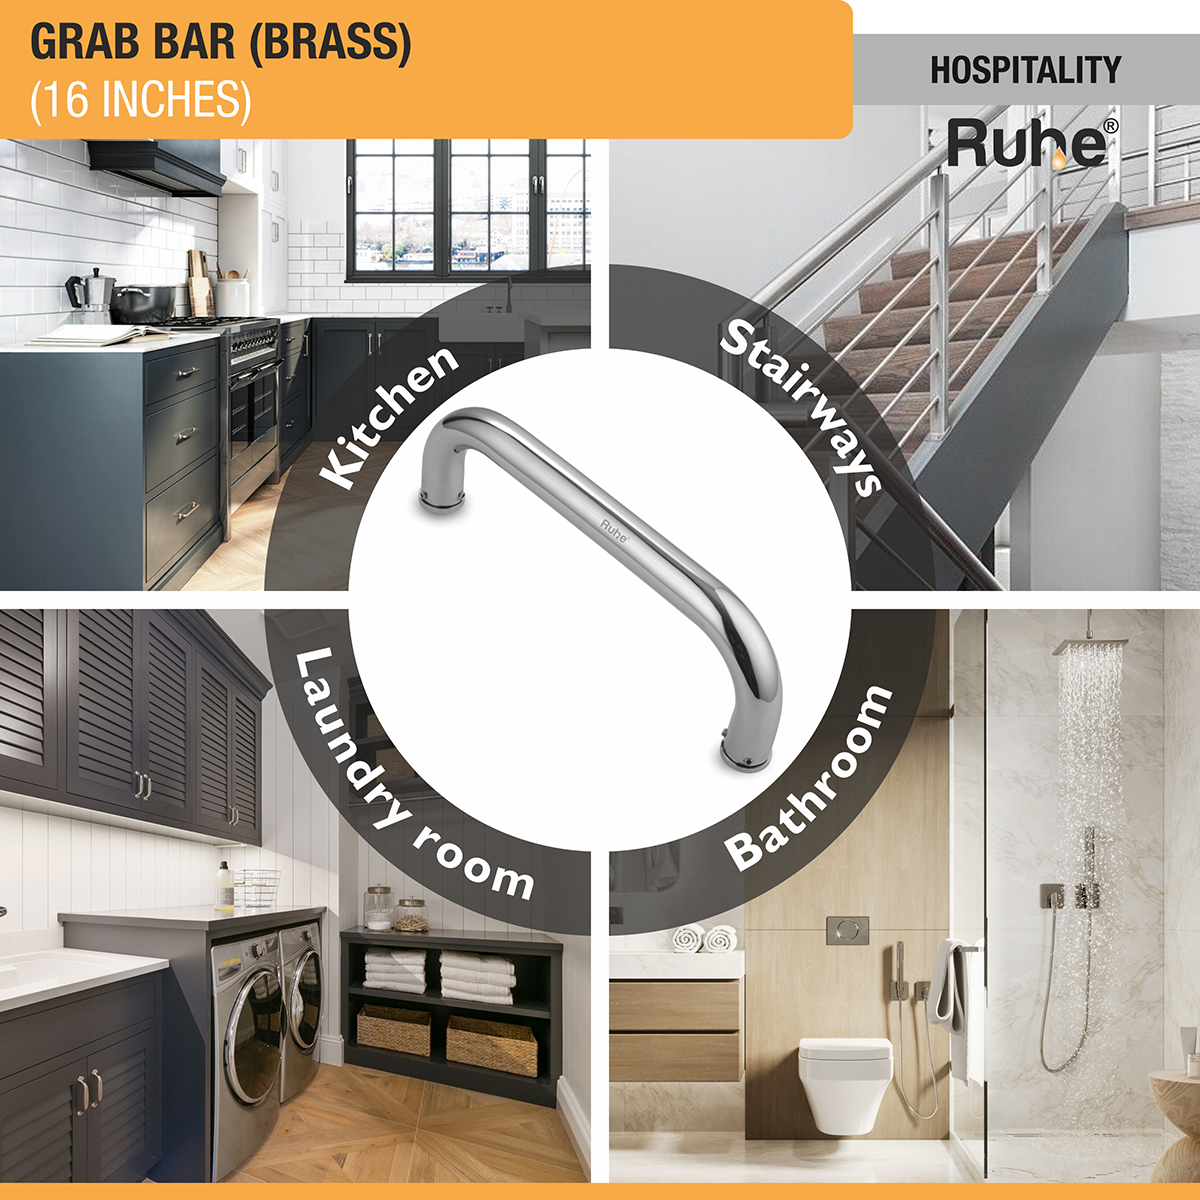 Brass Grab Bar (16 inches) with kitchen, stairways, laundry room, bathroom, washroom